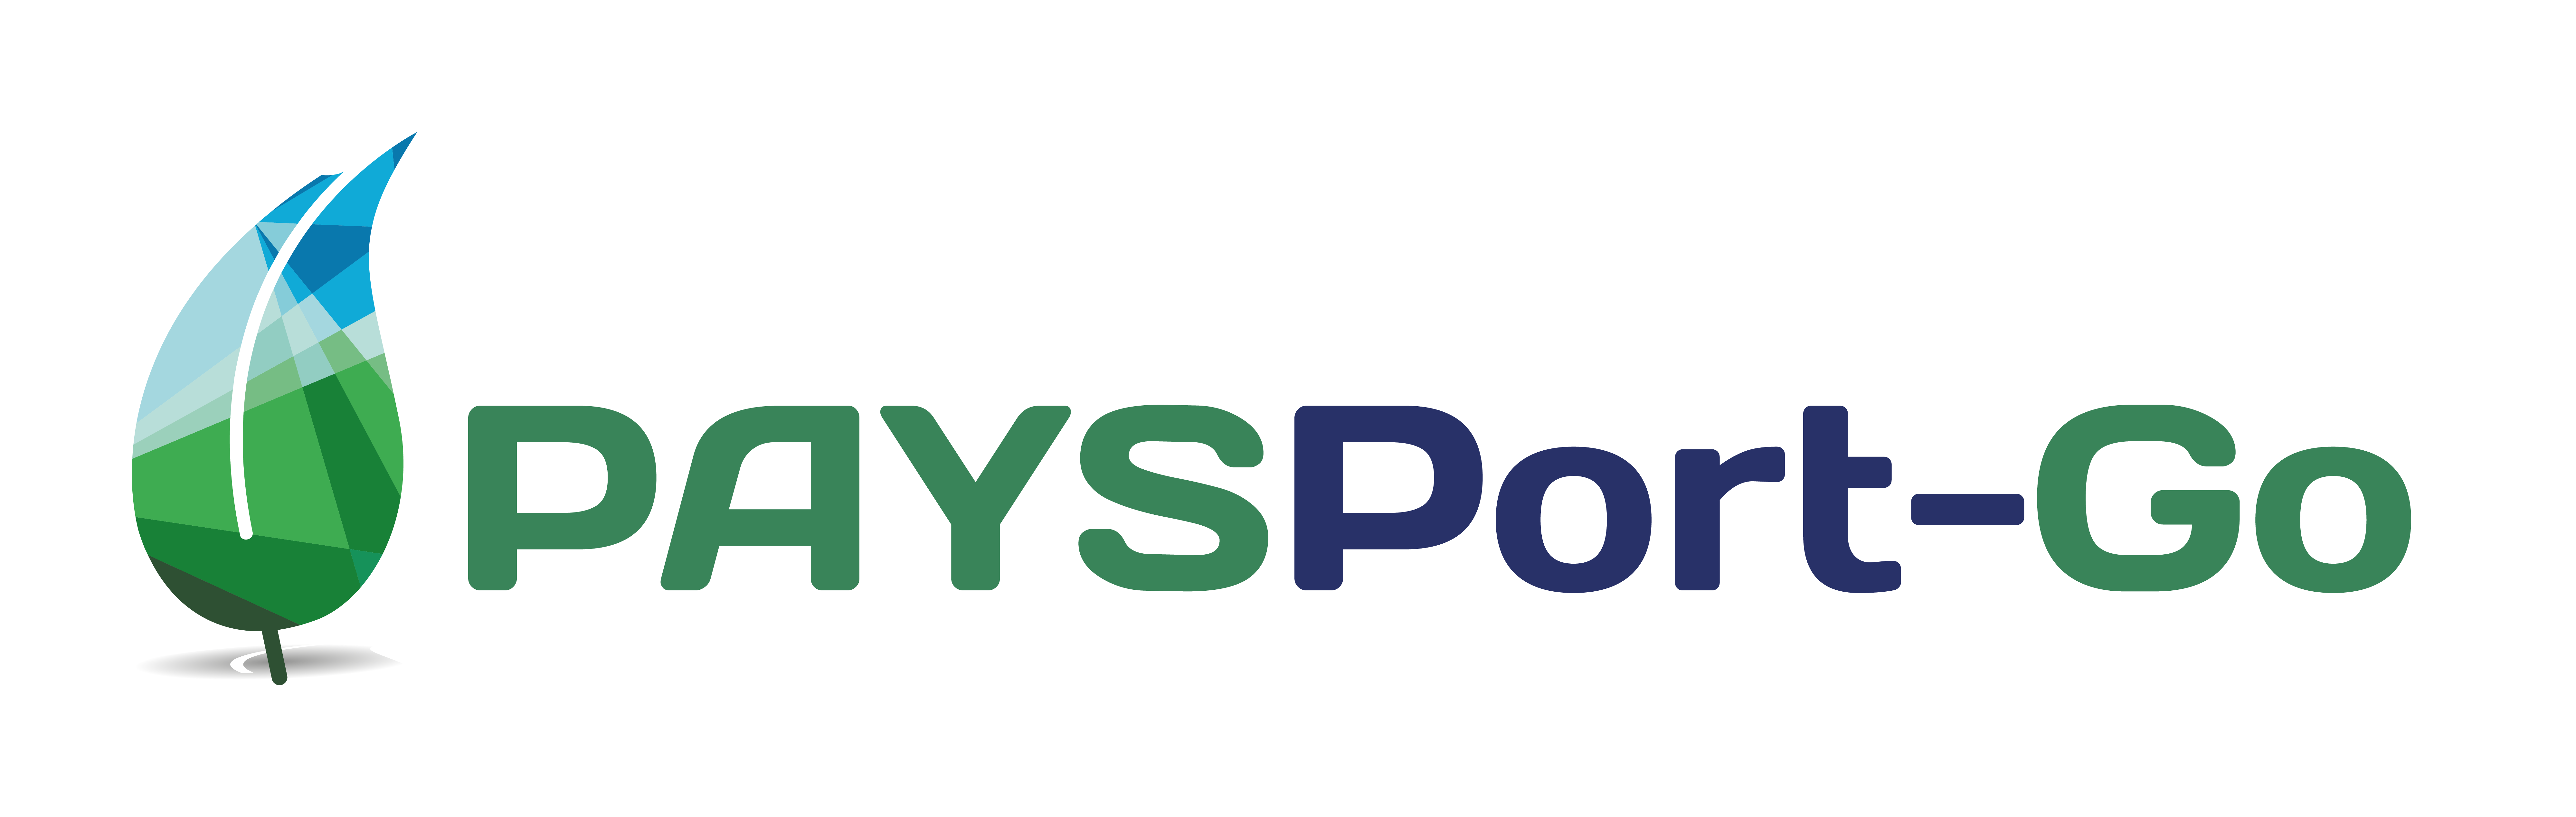 PAYSPort-Go heading logo